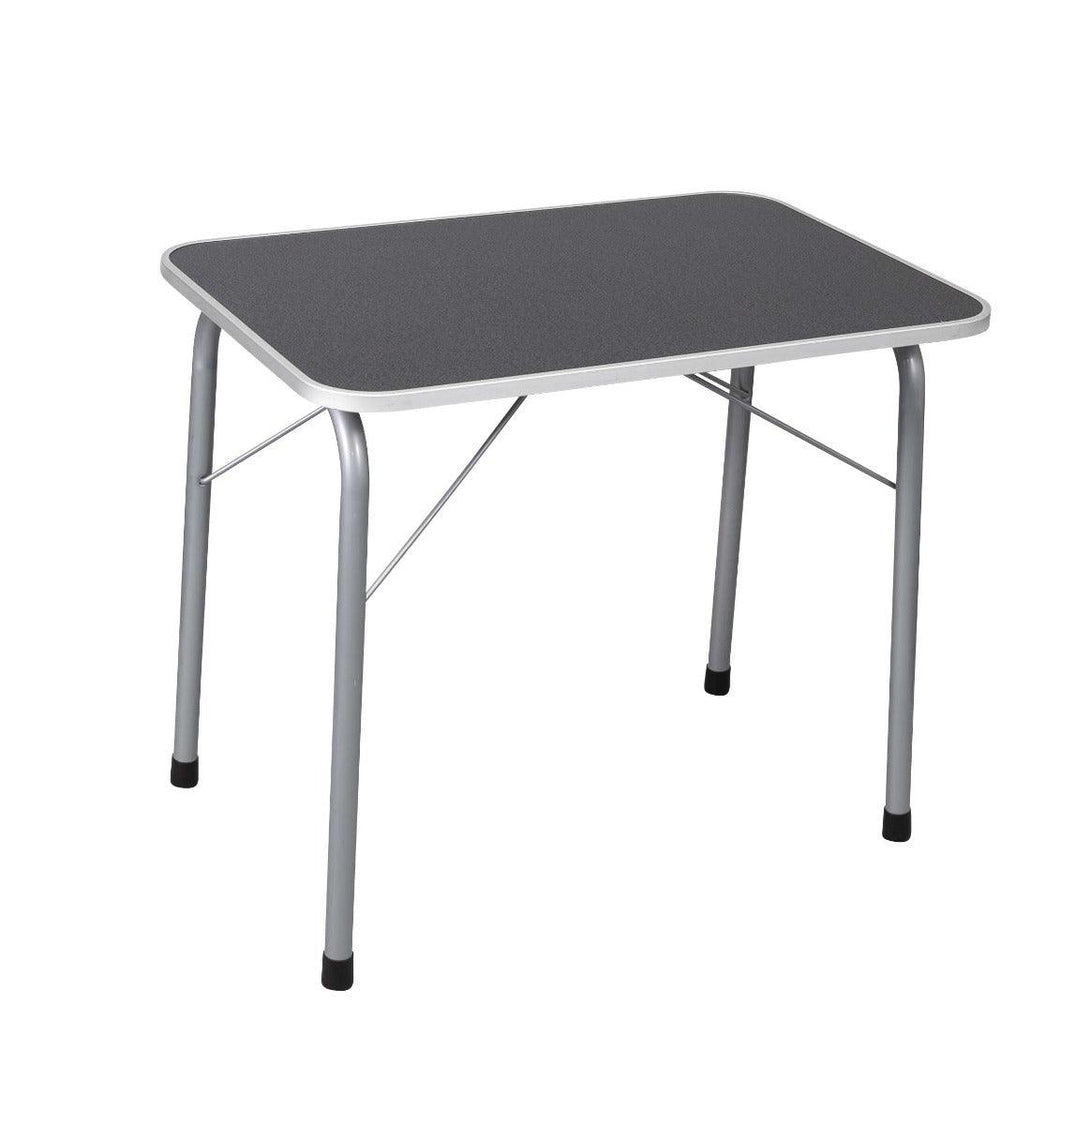 Via Mondo Small Folding Table - Charcoal